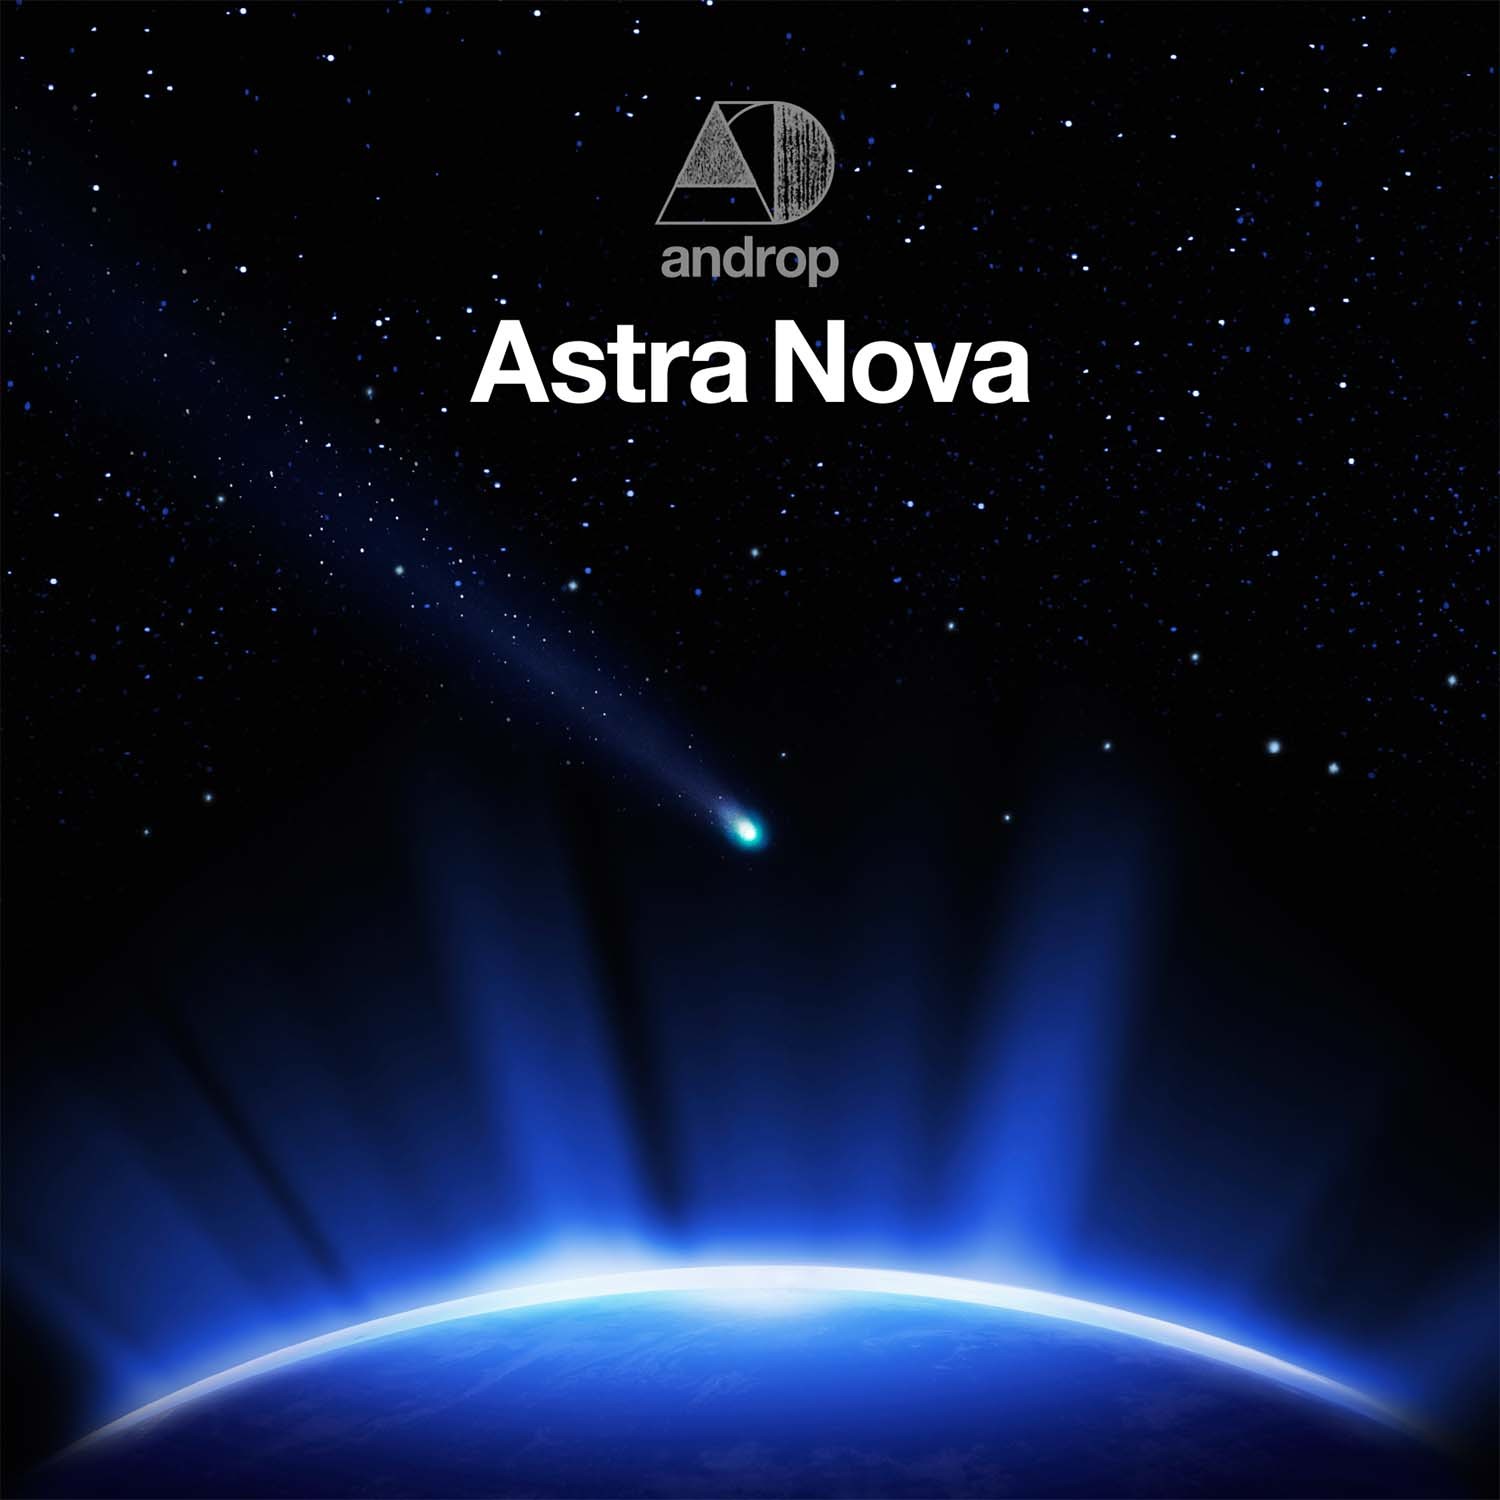 「Astra Nova」